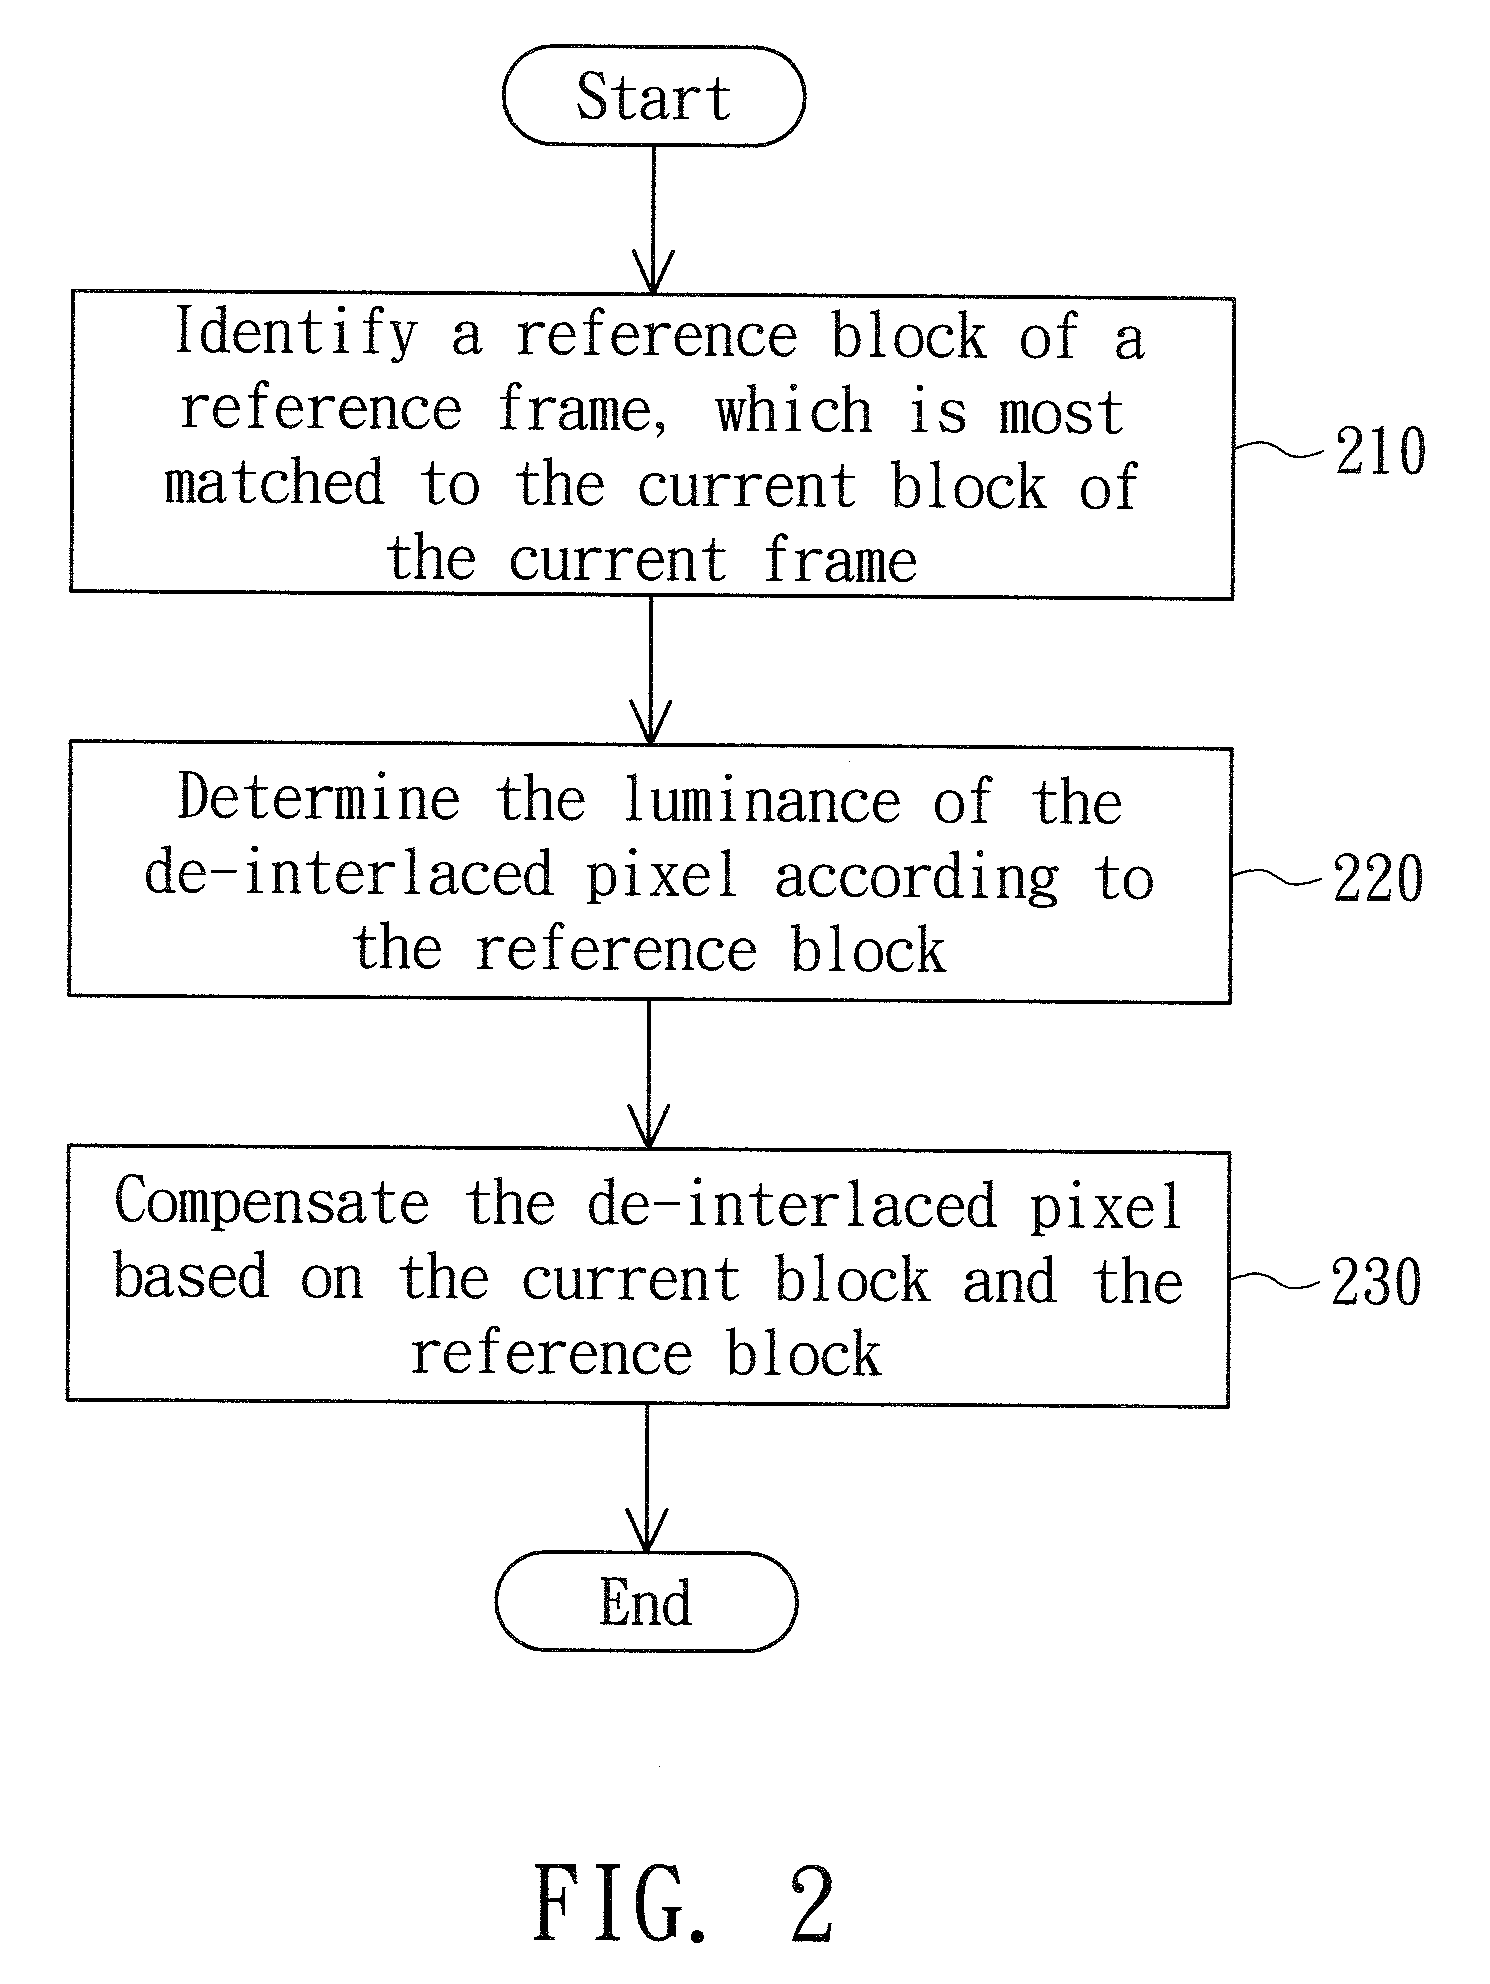 De-interlacing method and method of compensating a de-interlaced pixel